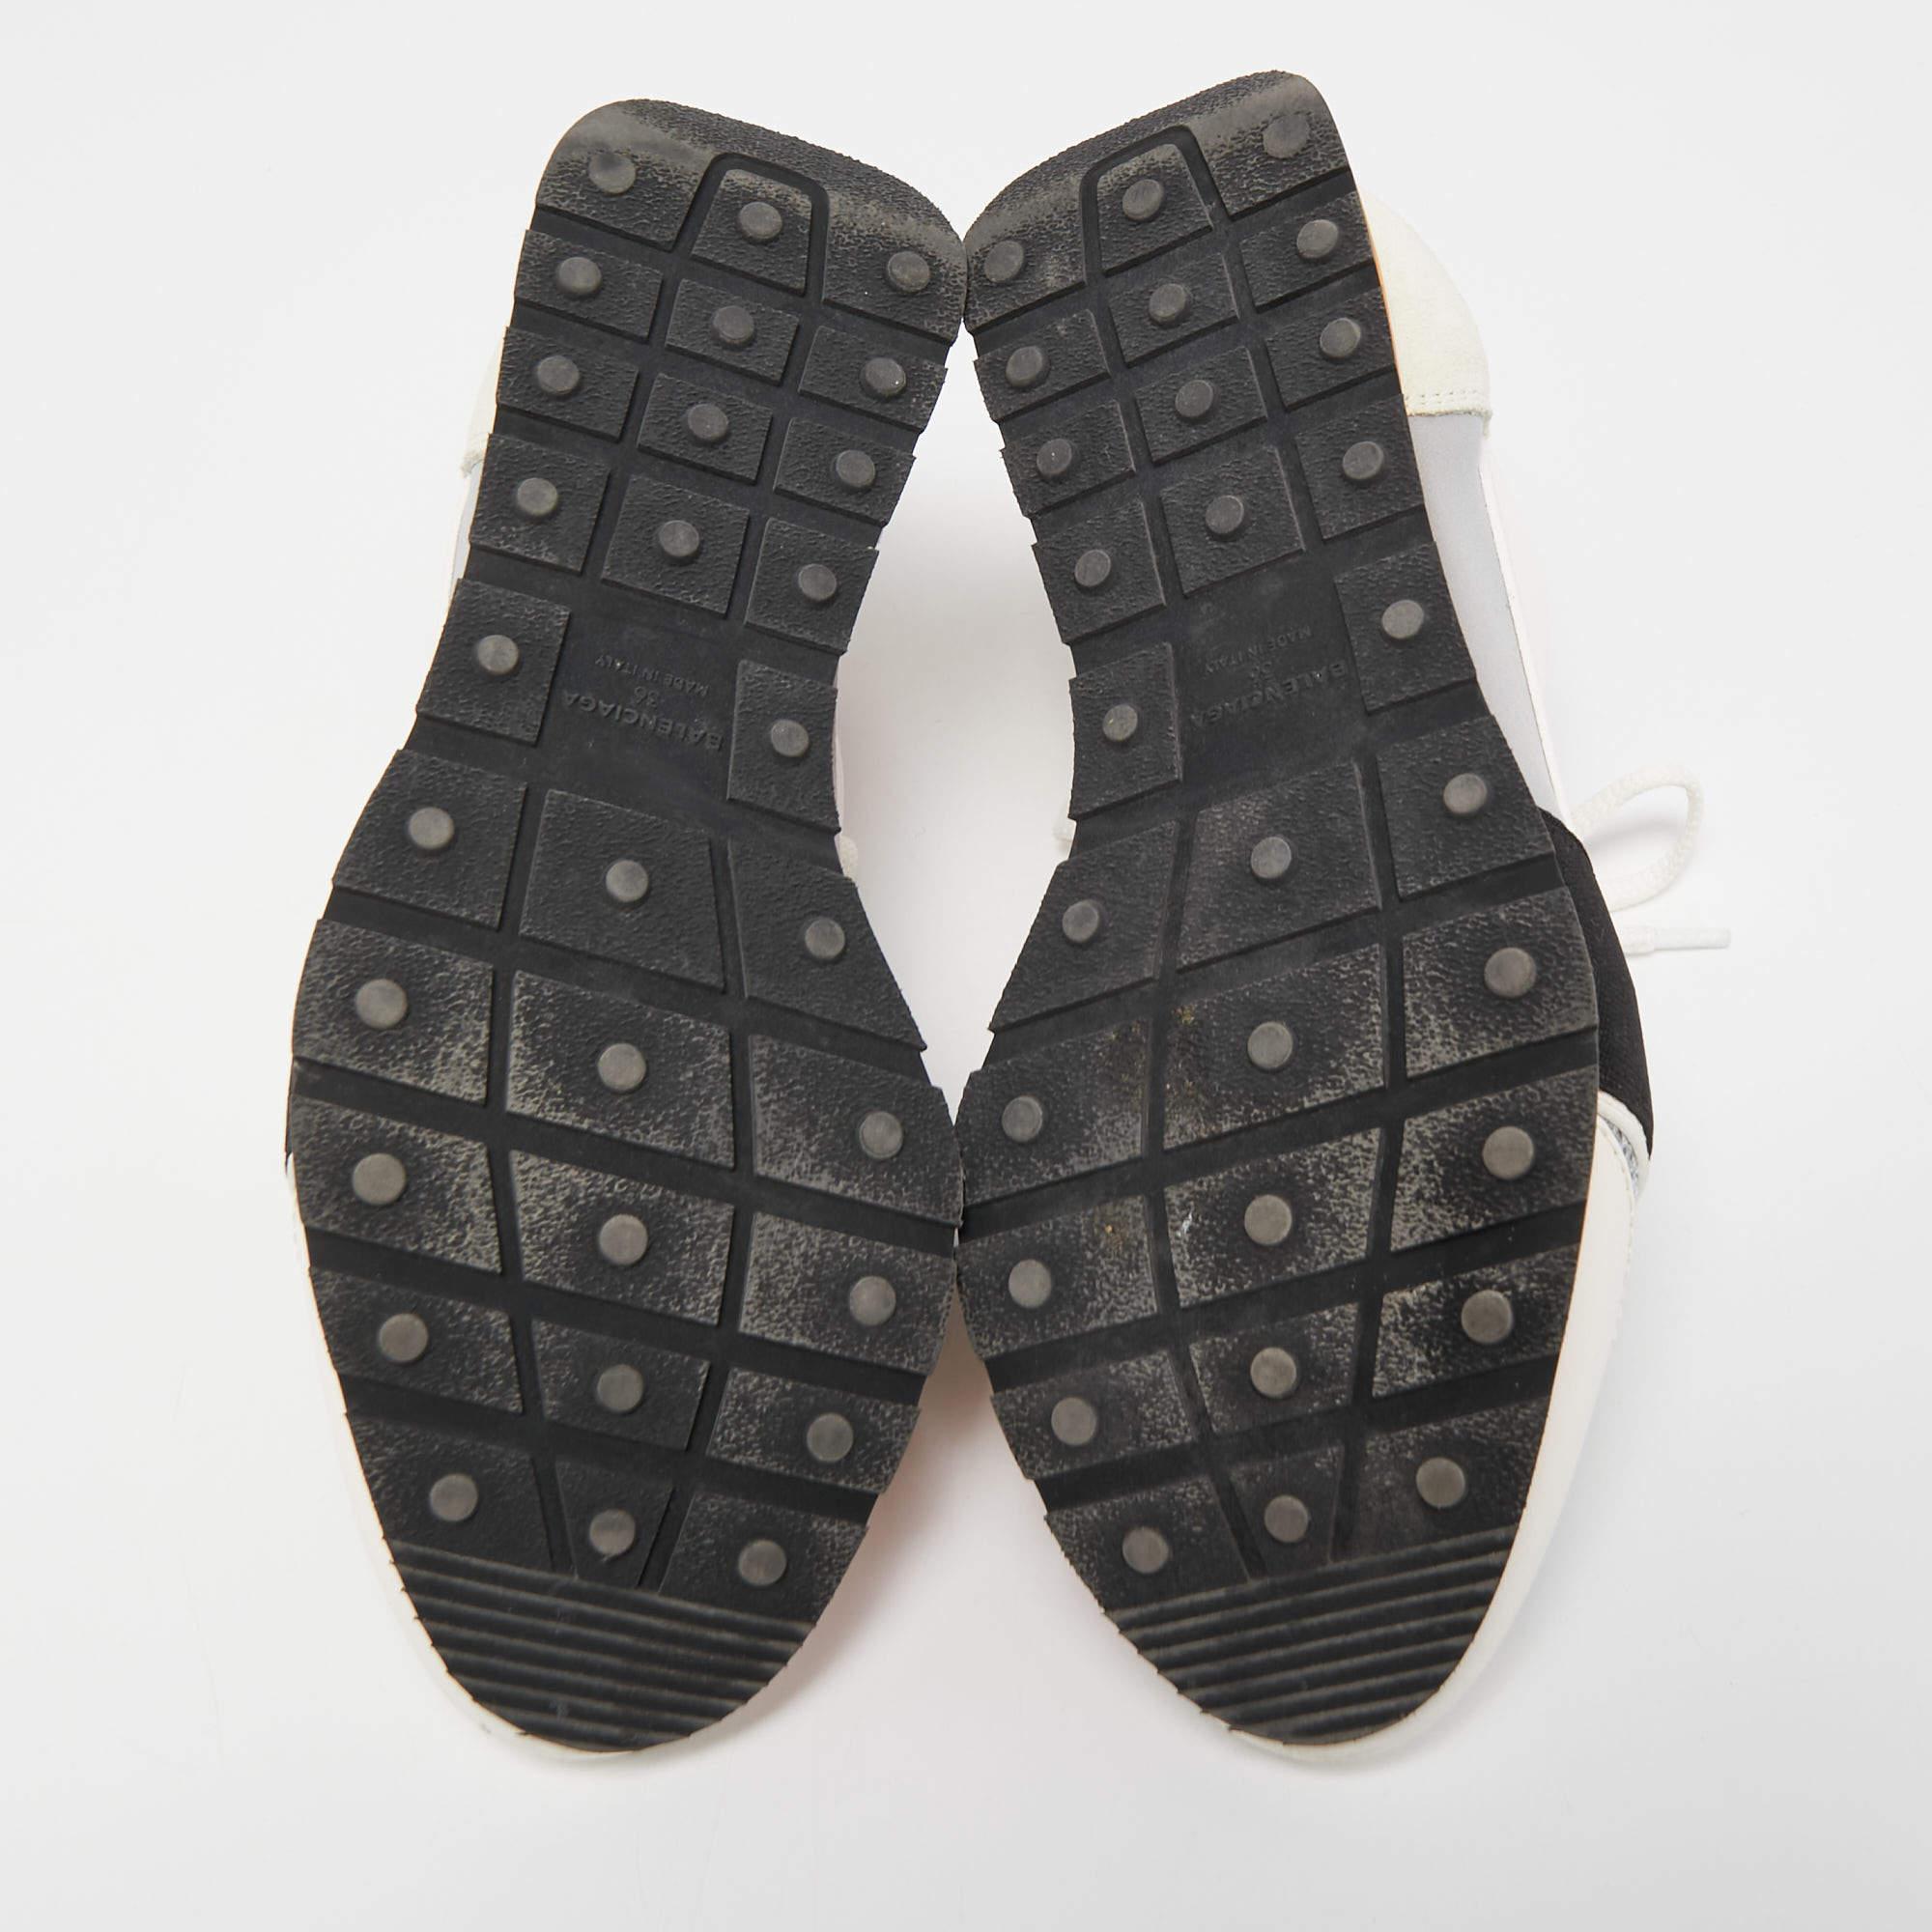 Balenciaga Tricolor Leather and Mesh Race Runner Sneakers Size 36 In Good Condition For Sale In Dubai, Al Qouz 2